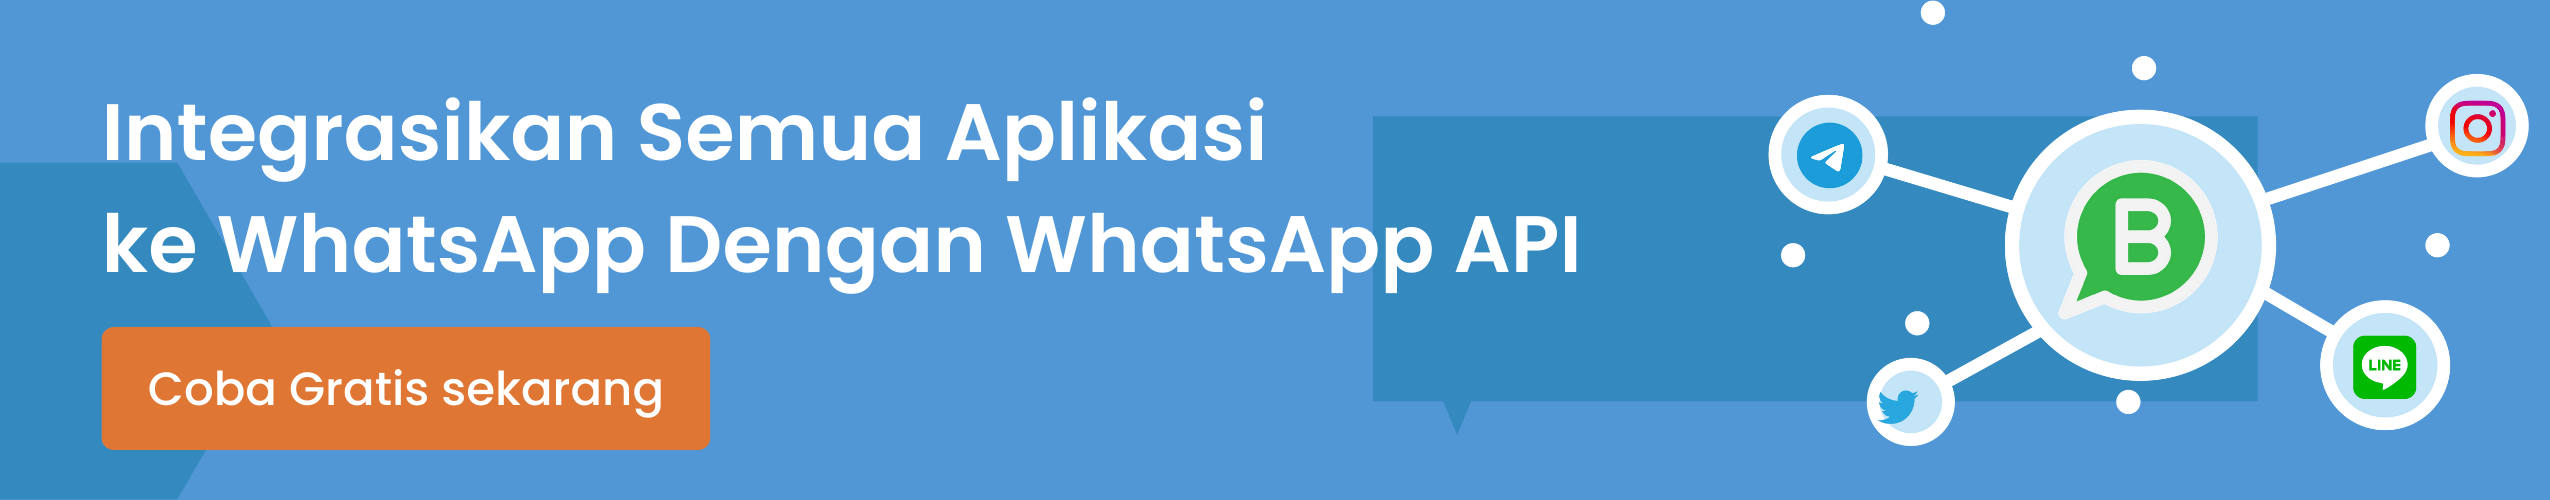 Barantum - Mitra Resmi WhatsApp API Indonesia